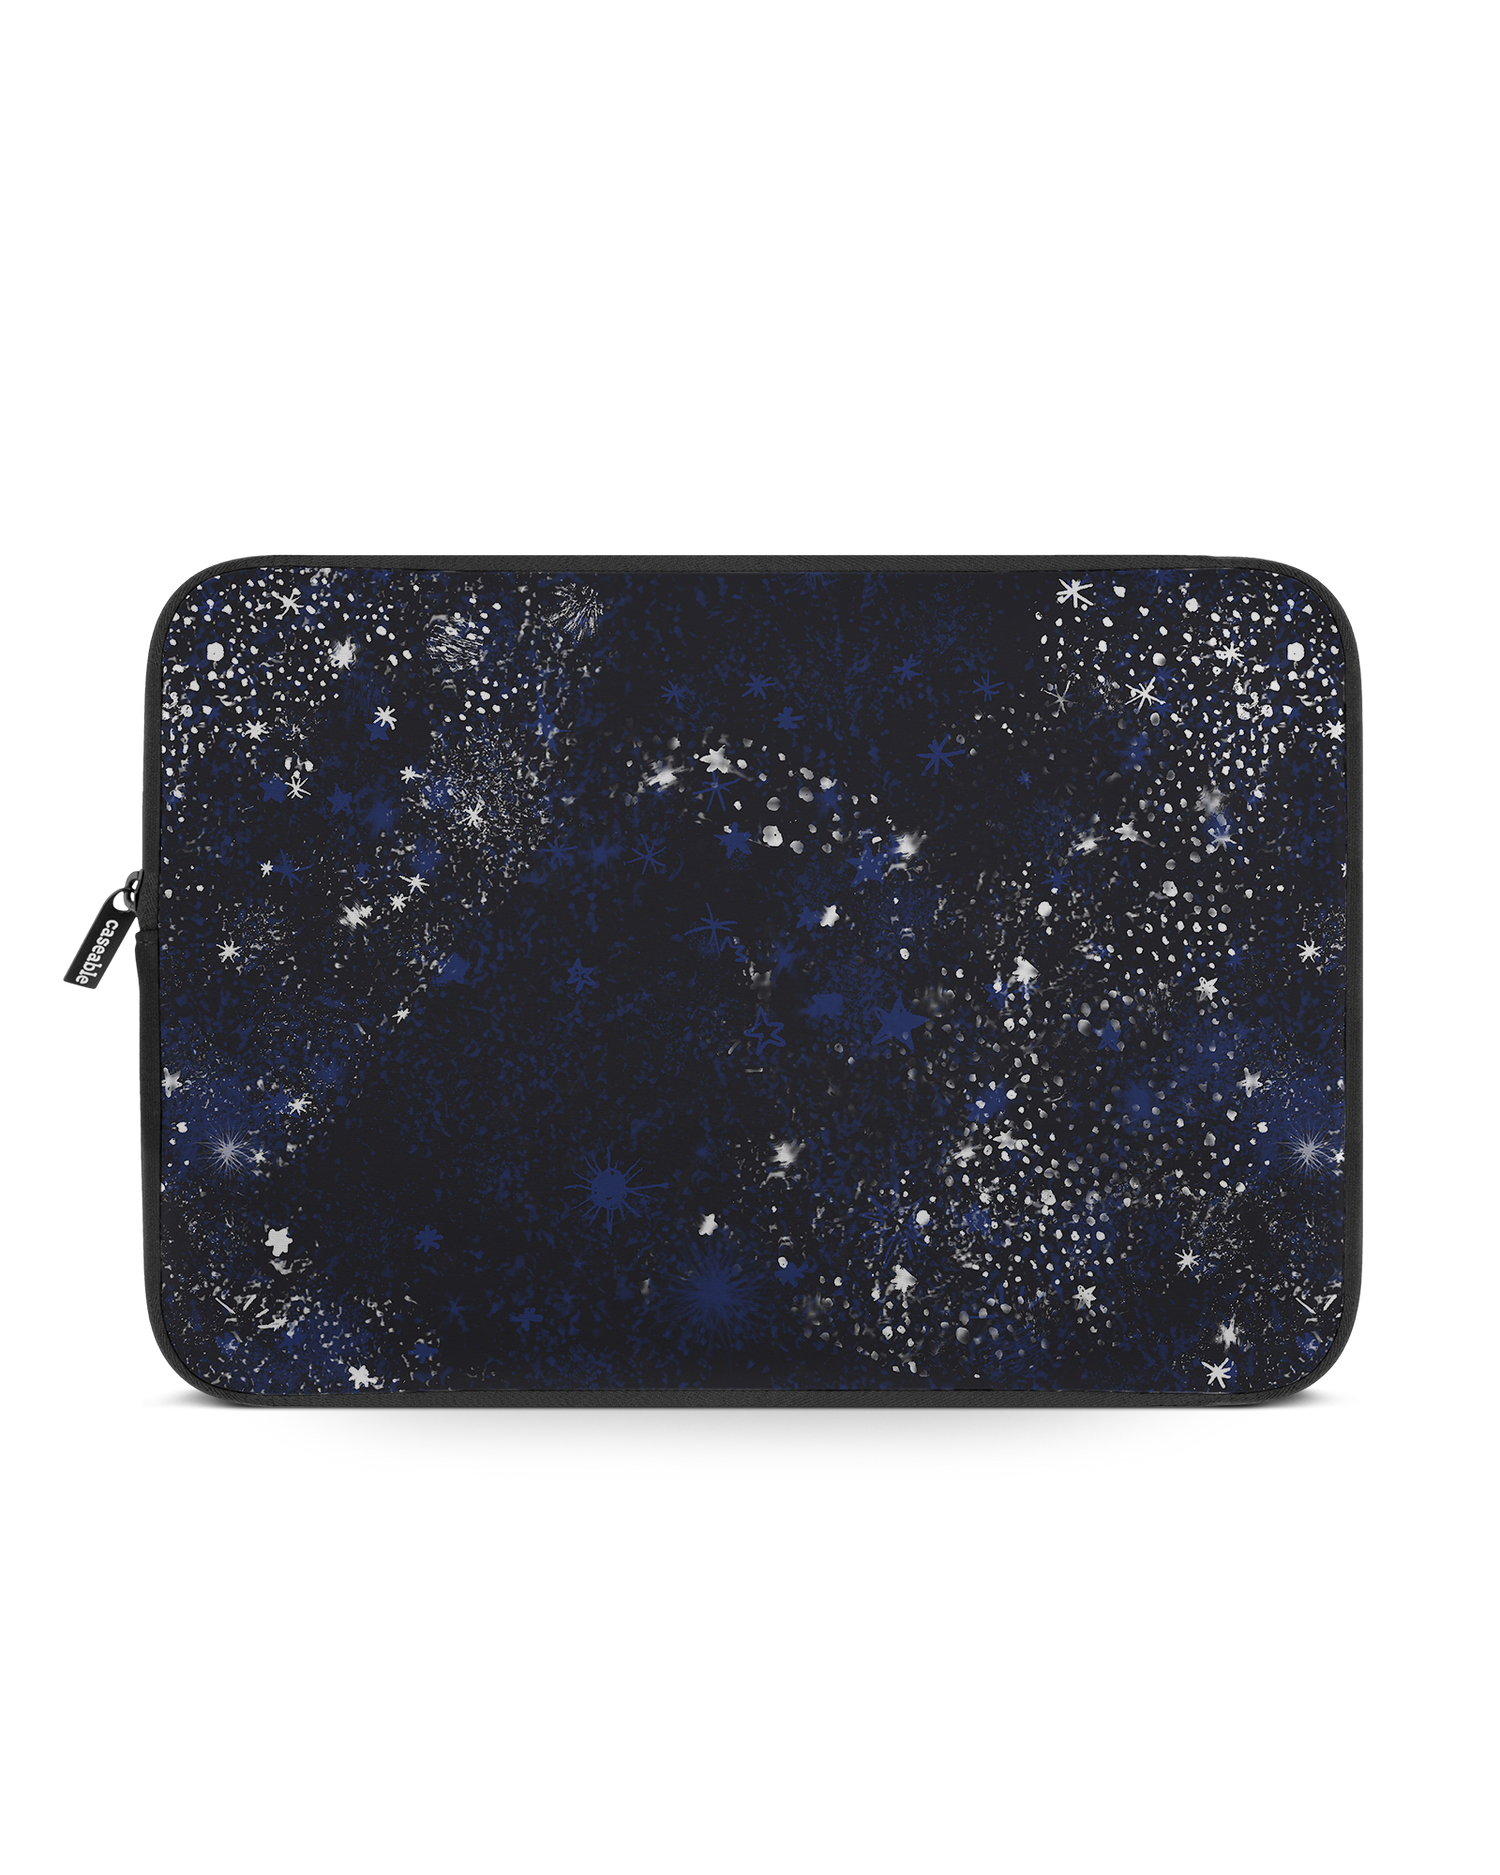 Starry Night Sky Laptophülle 14 Zoll: Vorderansicht